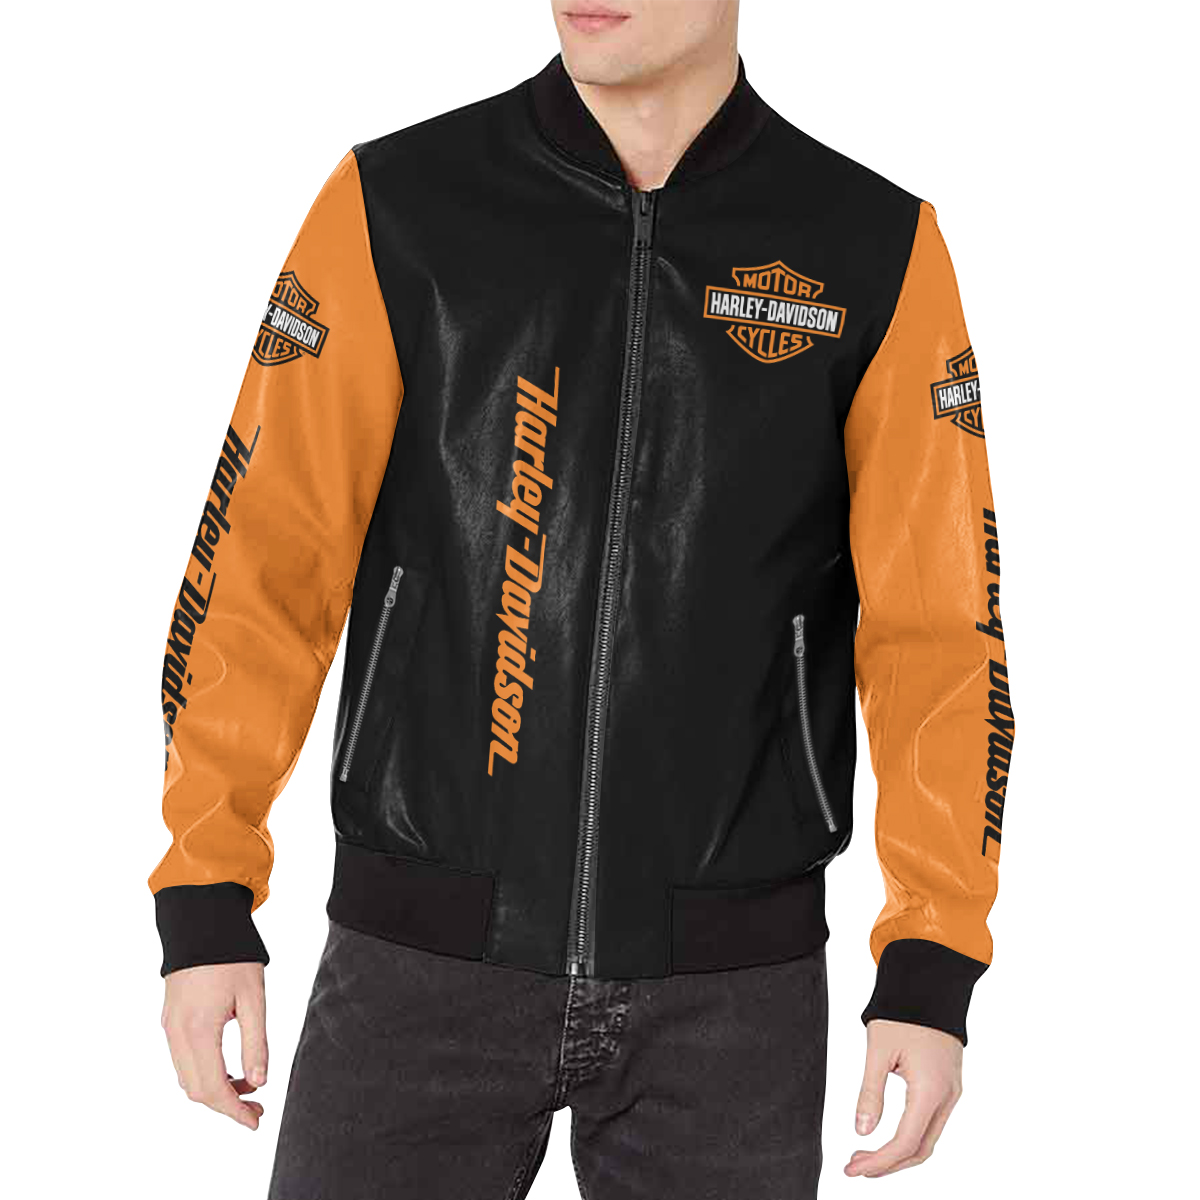 Harley Davidson Leather Bomber Jacket VD06 - CreatedOnSun